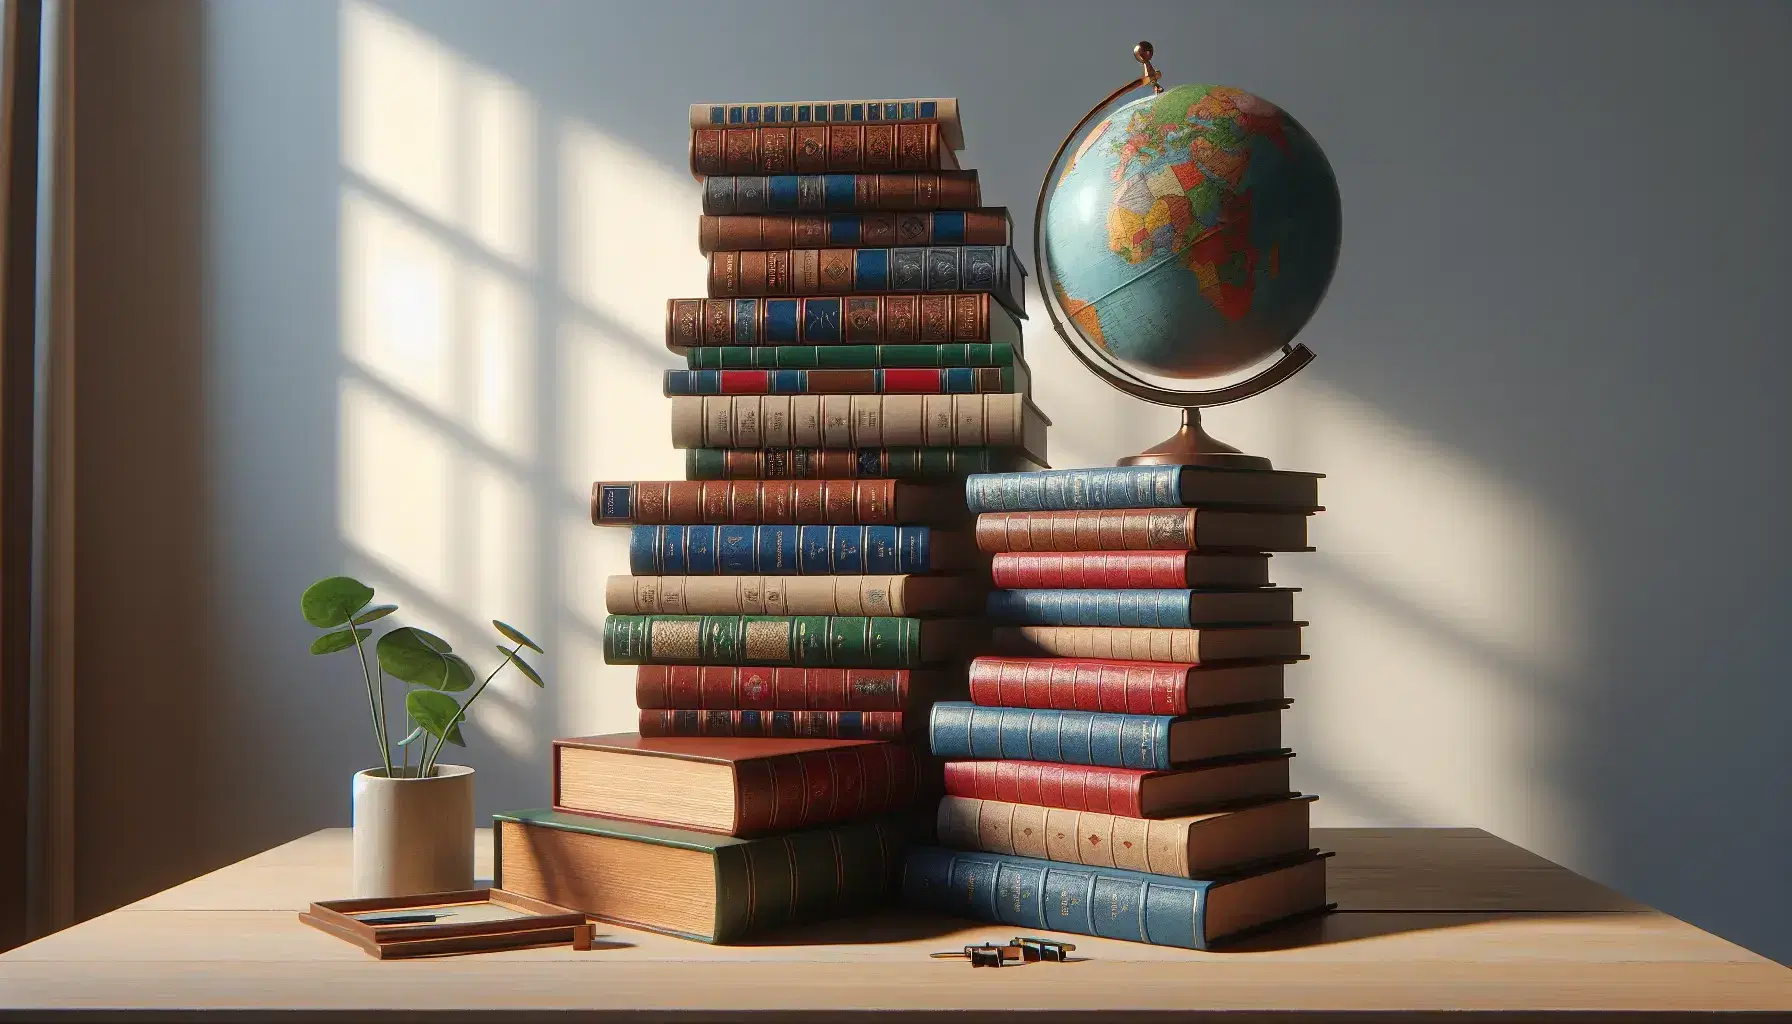 Libros apilados en forma de escalera sobre mesa de madera clara con globo terráqueo mostrando Europa y África, bajo iluminación natural que resalta colores y texturas.